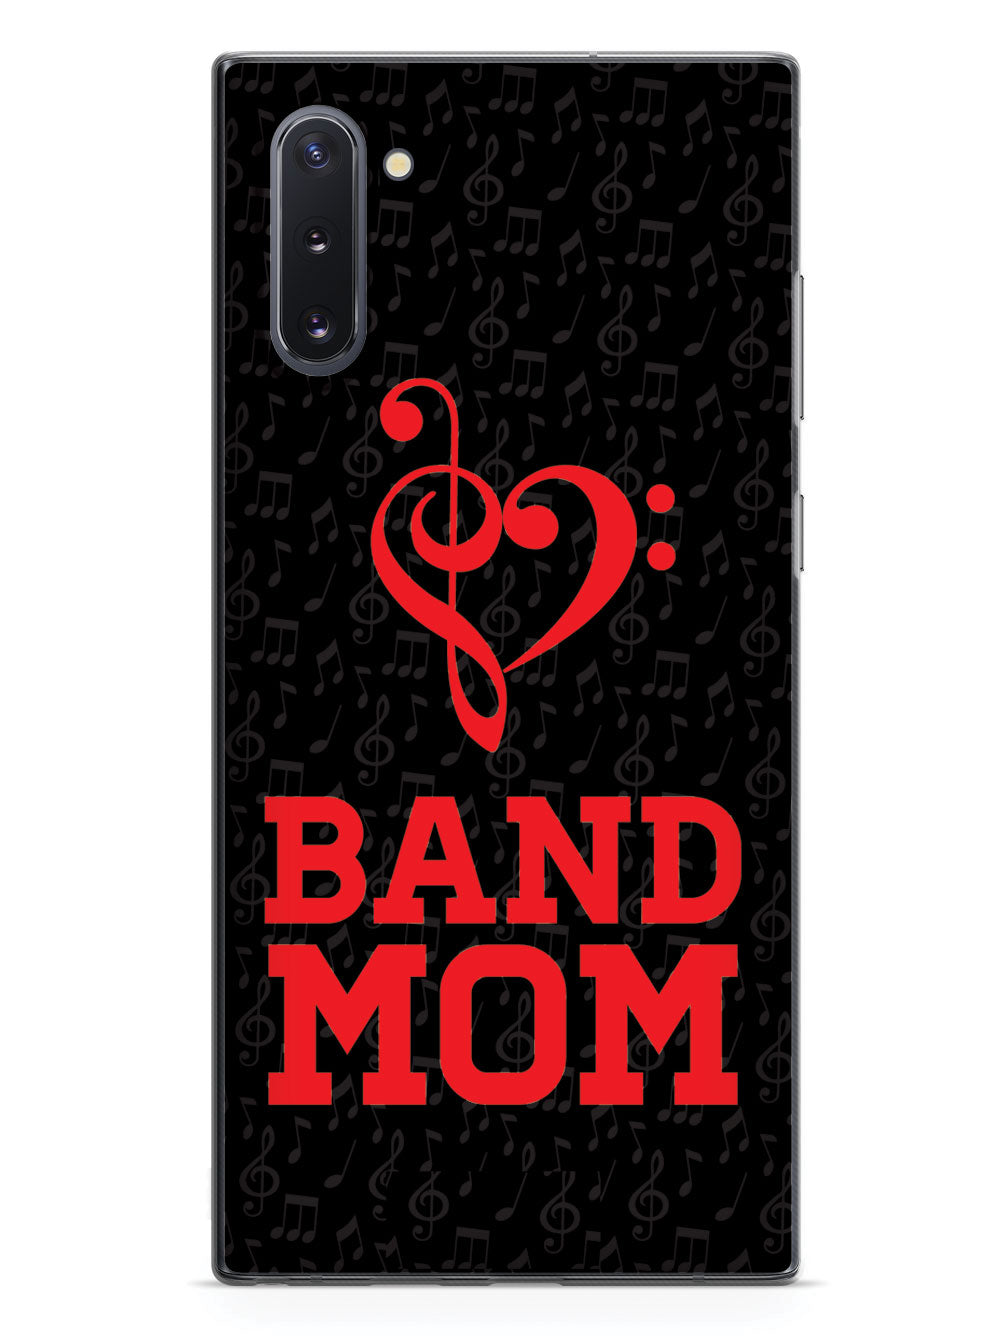 Band Mom Case